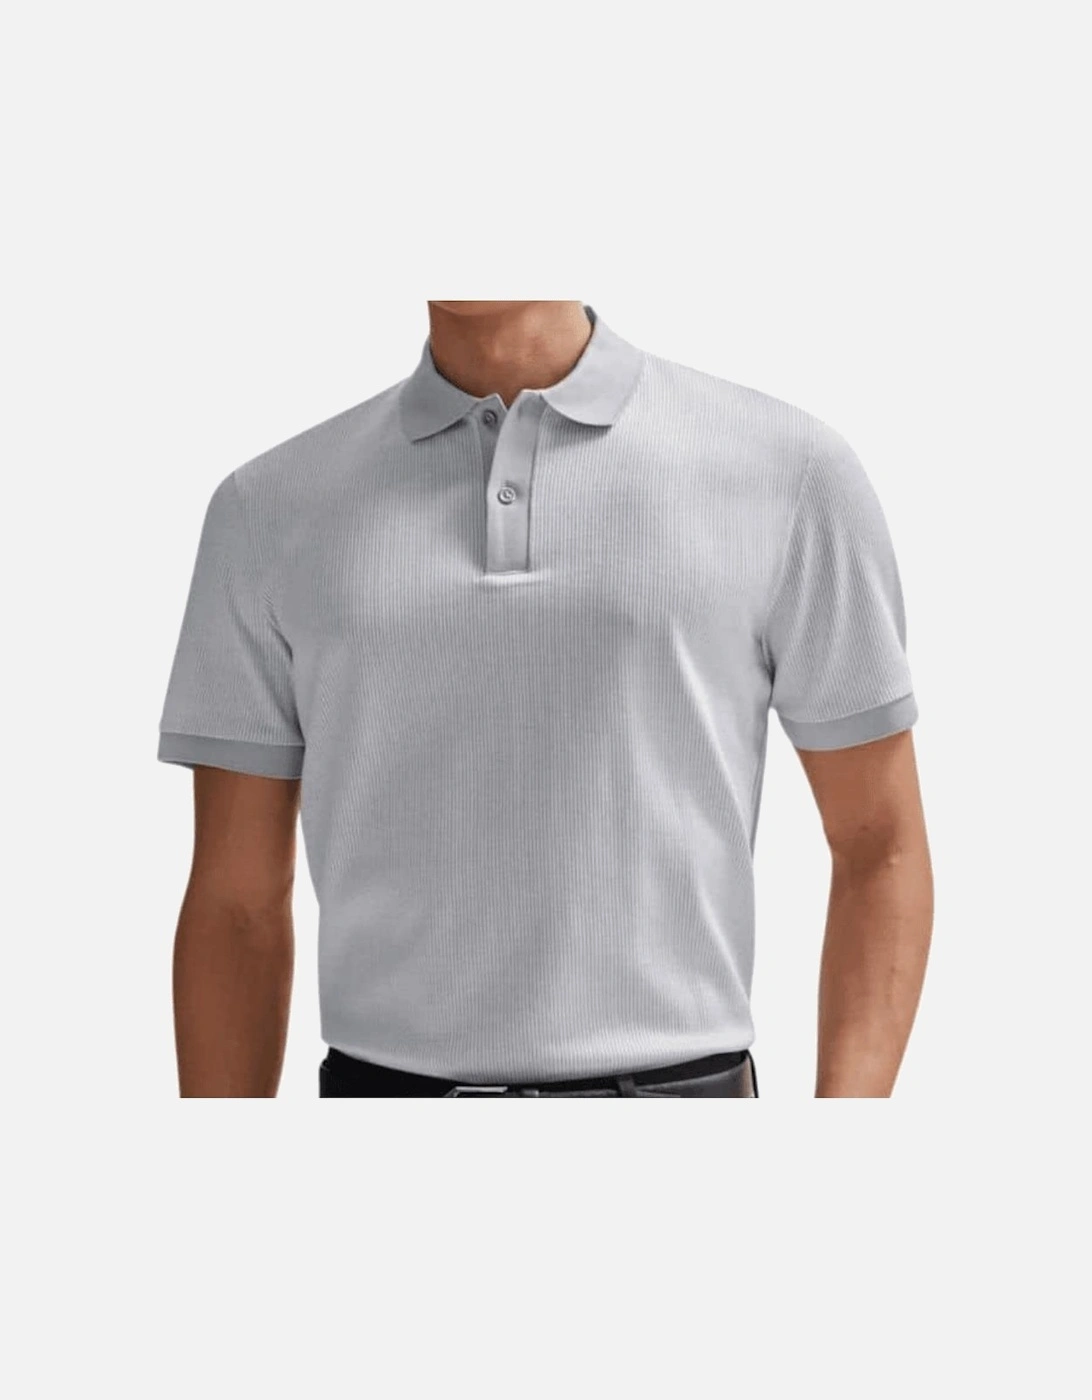 Parlay 425 Regular Fit Grey Polo Shirt